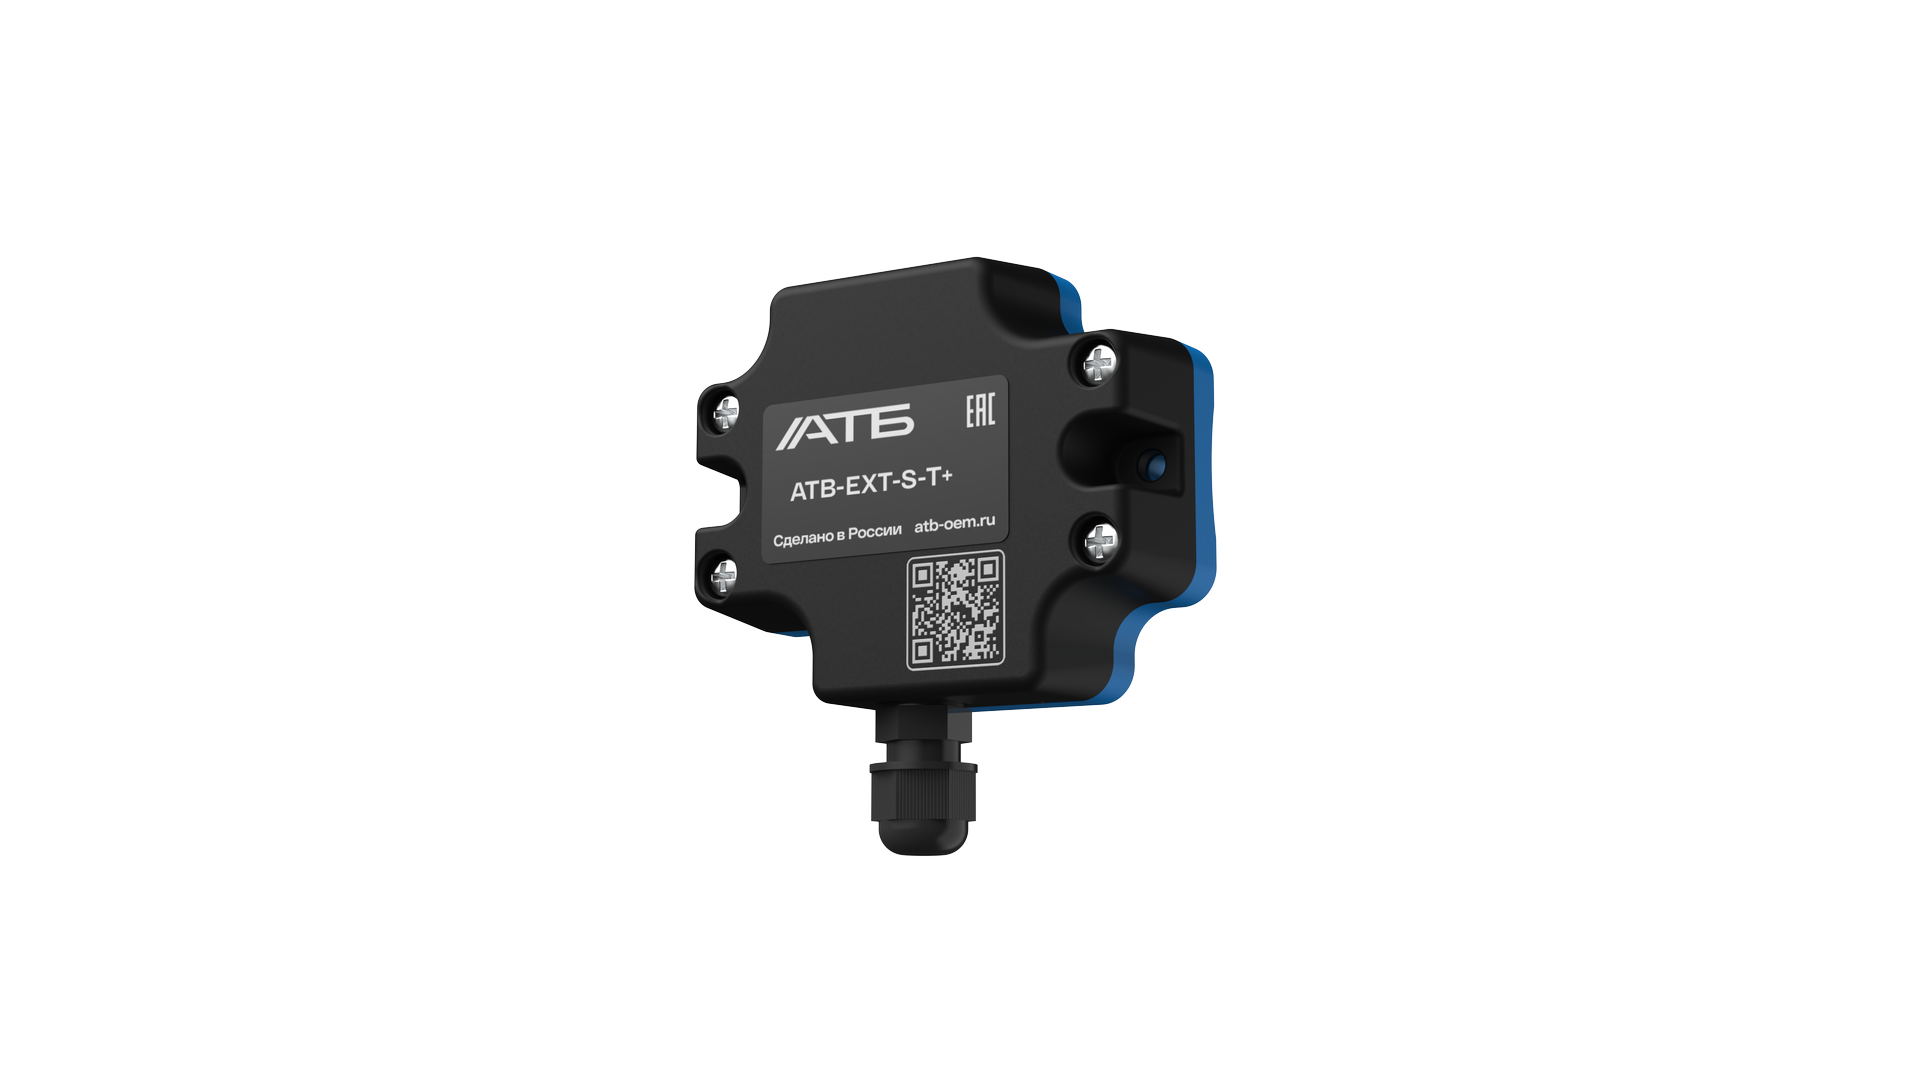 ATB-EXT-S-T+ Датчик температуры и влажности I2C